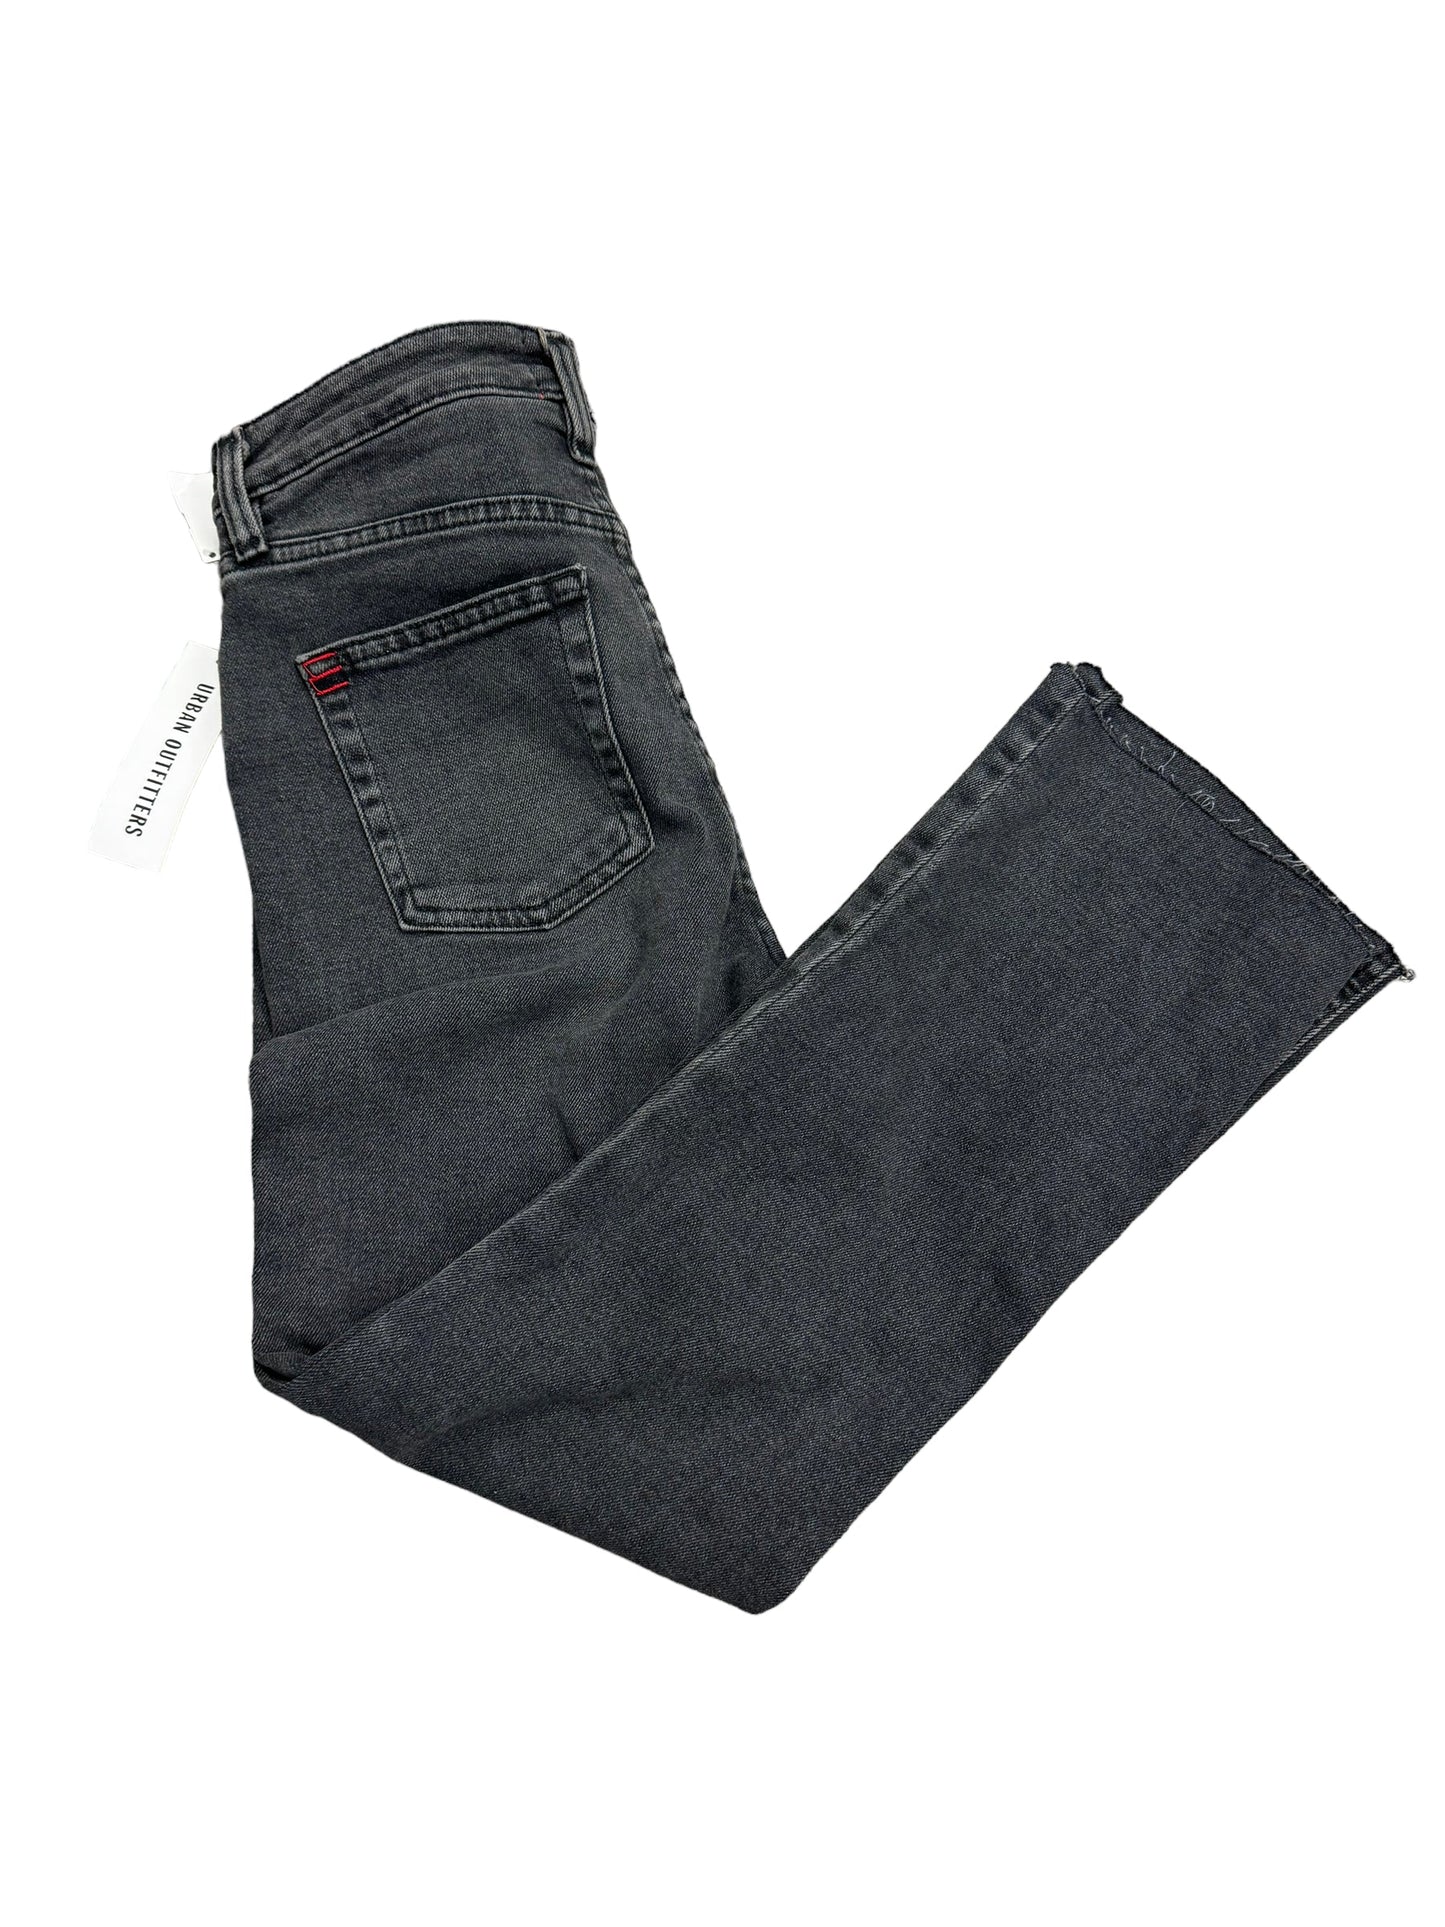 Jeans Designer By Cma  Size: 2